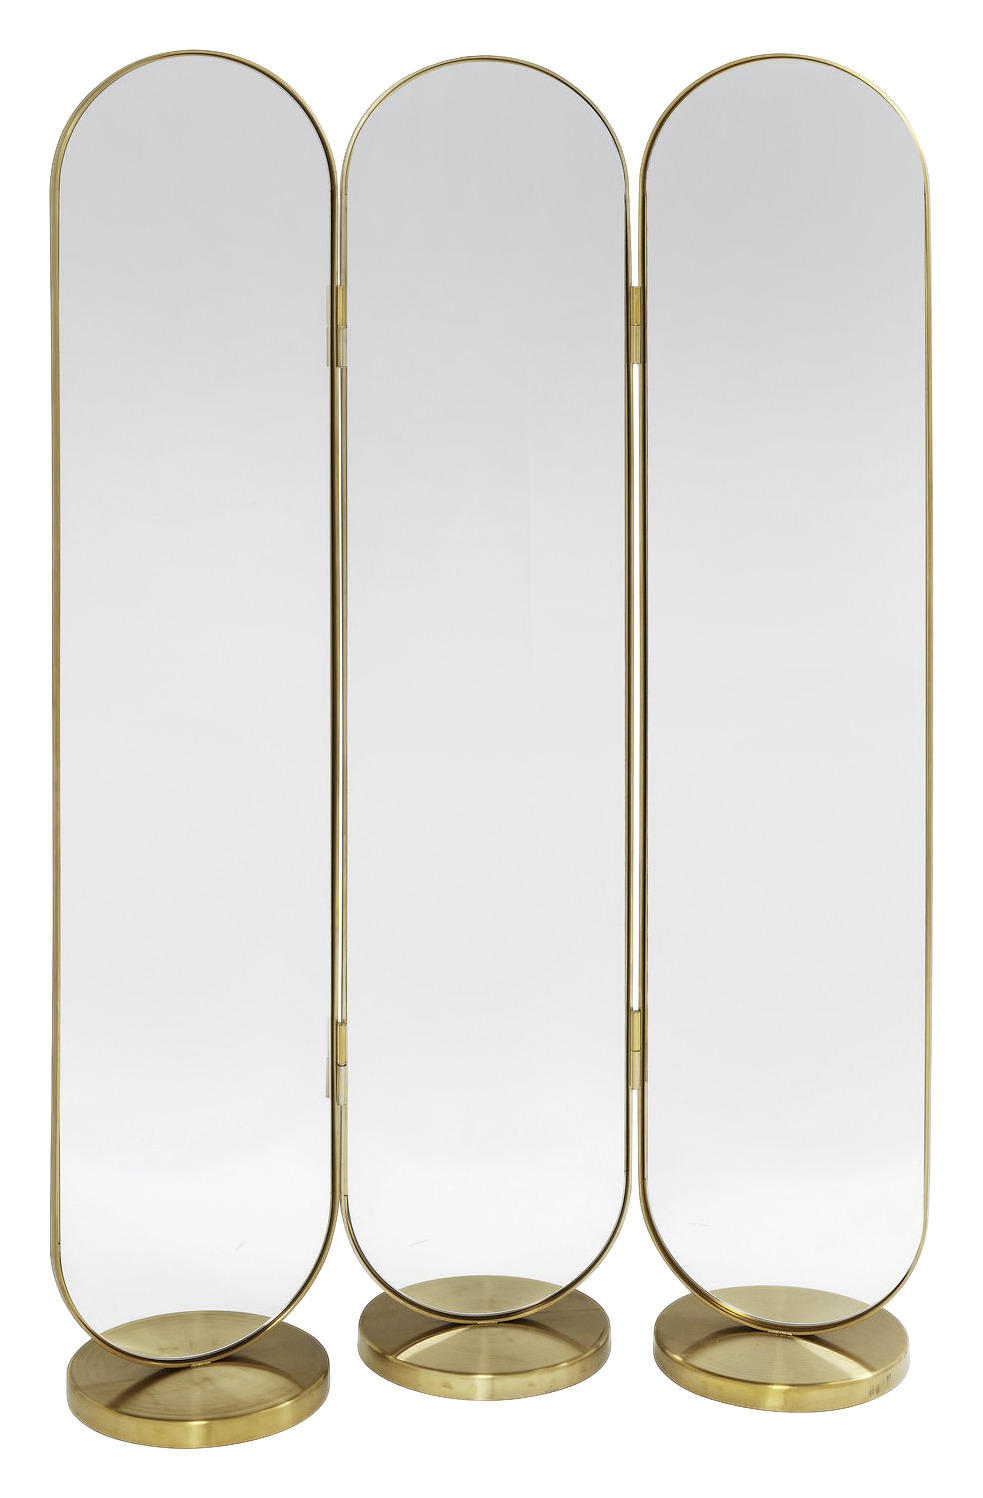 SPIEGEL-PARAVENT Metall, Glas Goldfarben  - Goldfarben, Trend, Glas/Metall (106/166/31cm) - Kare-Design